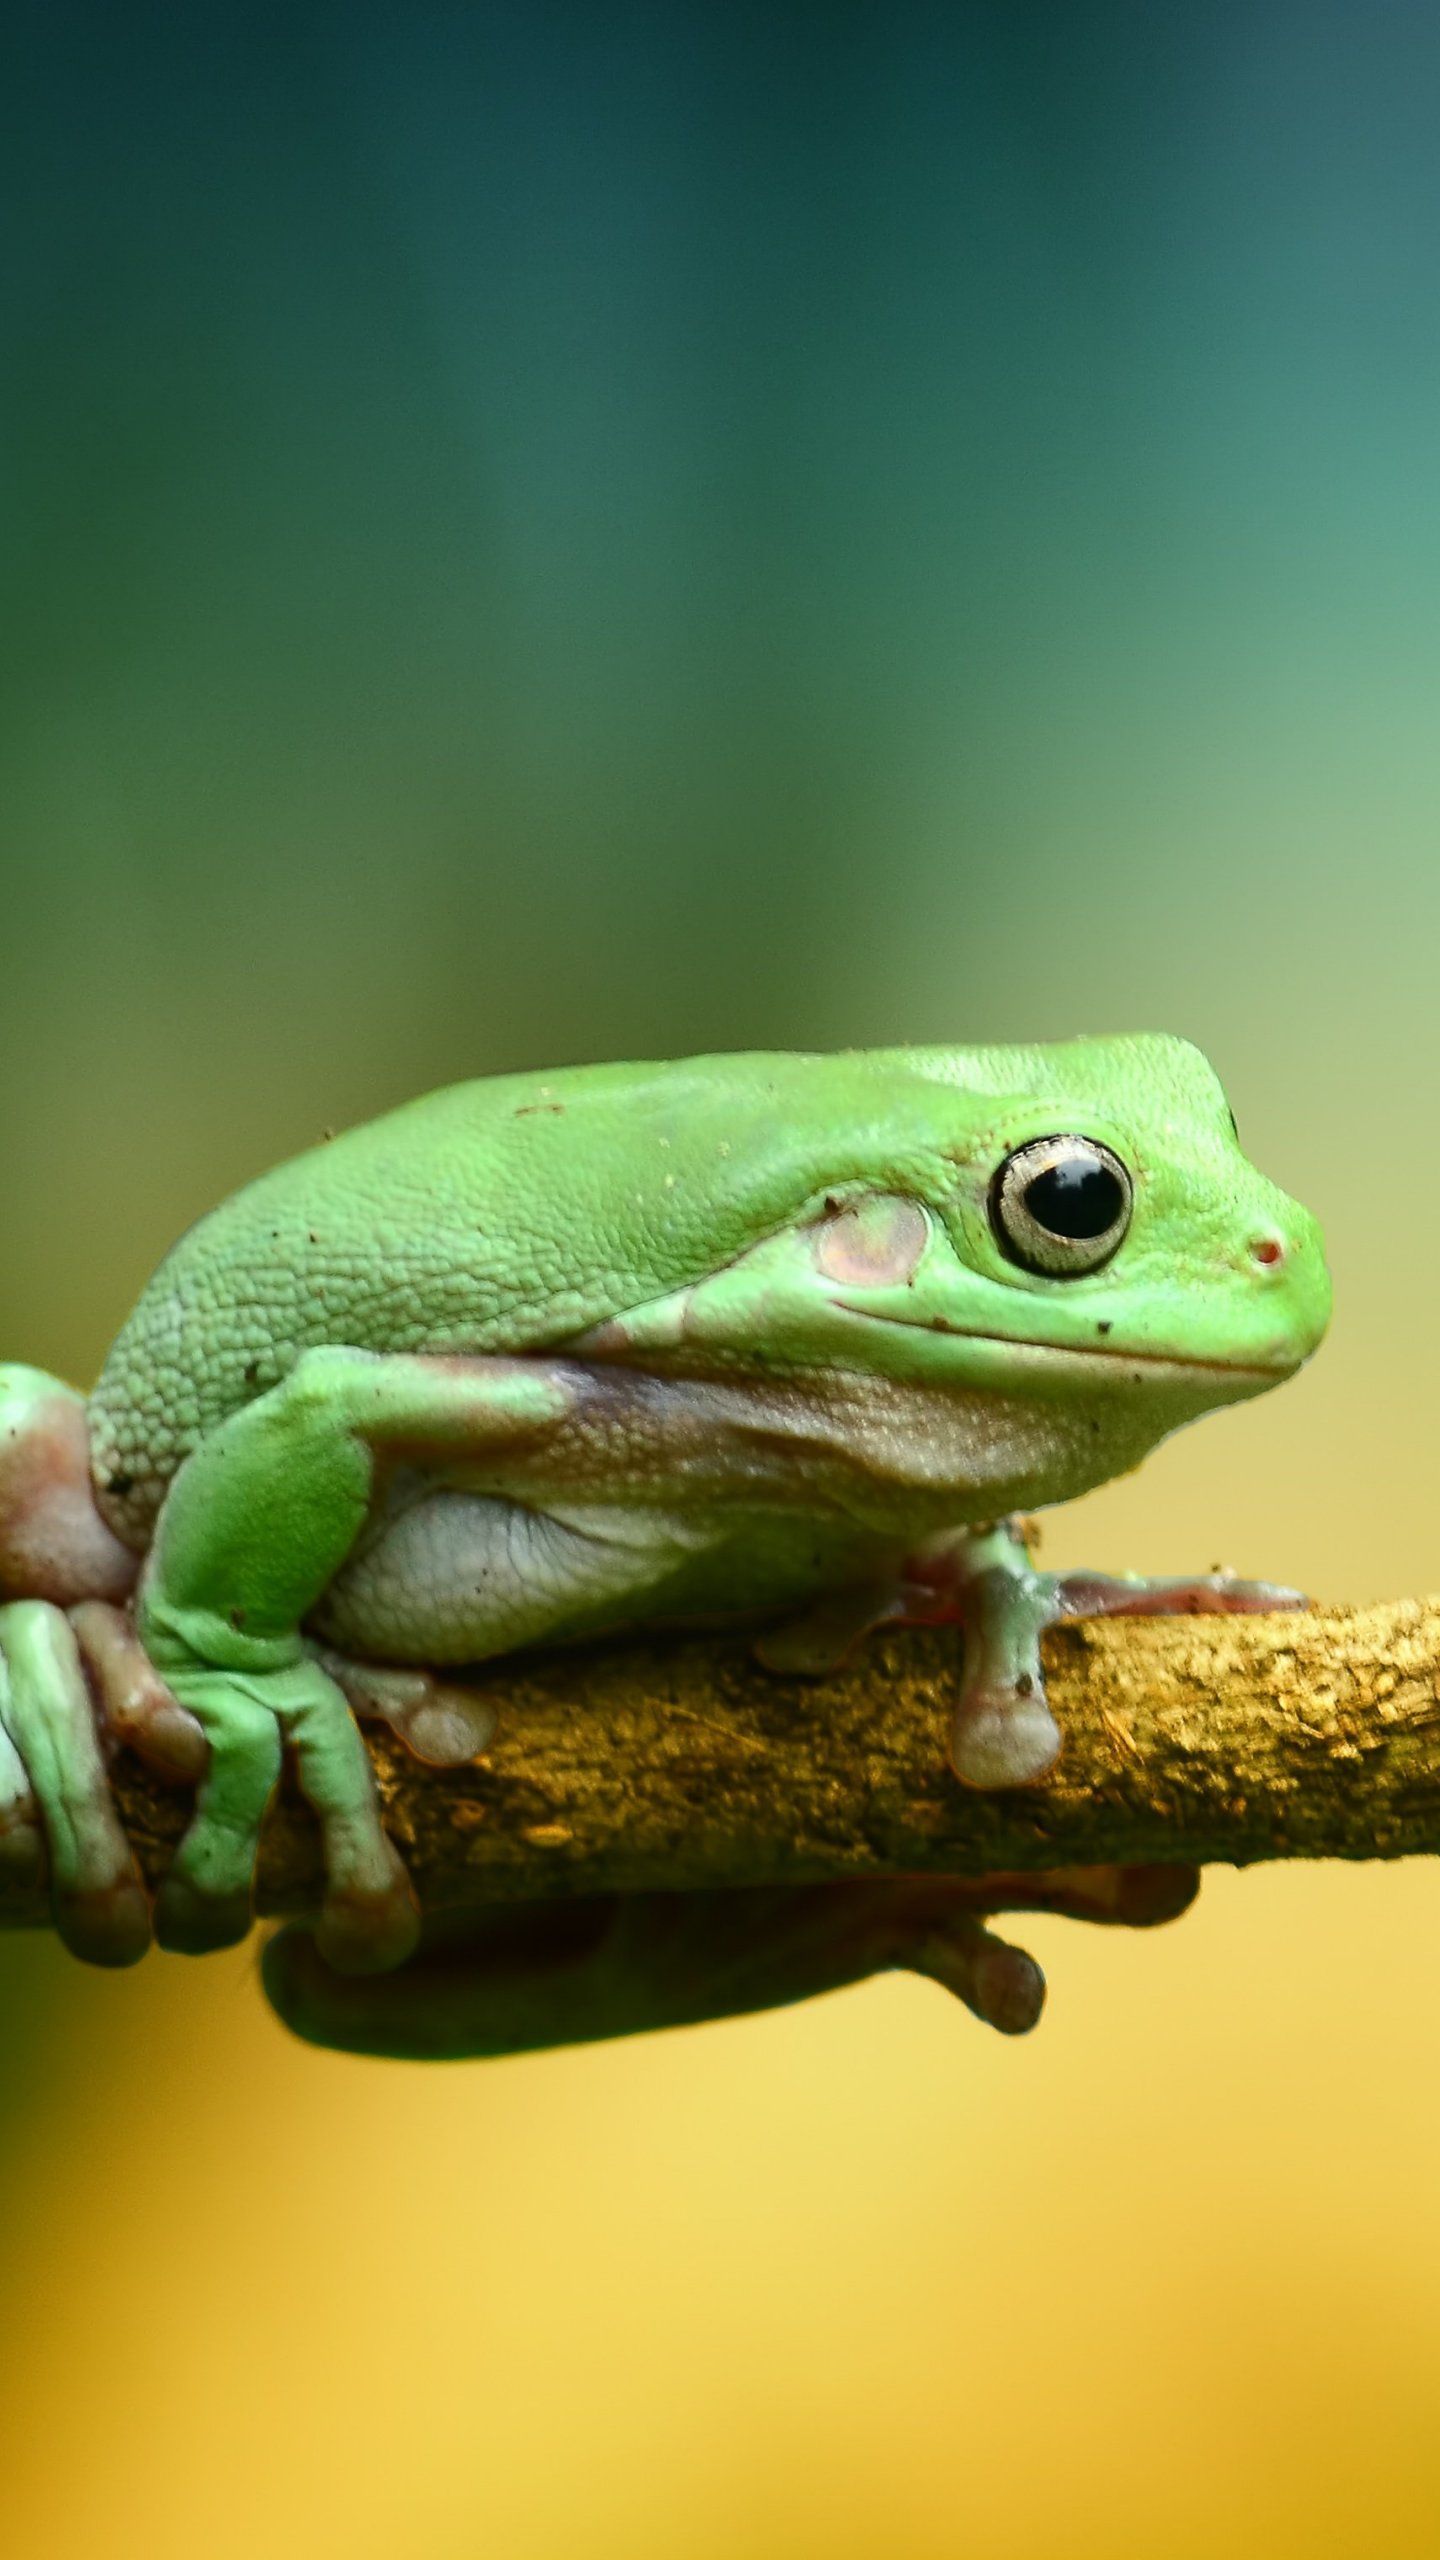 Green Frog Wallpaper, Android & Desktop Background. Frog wallpaper, Mobile wallpaper, Frog